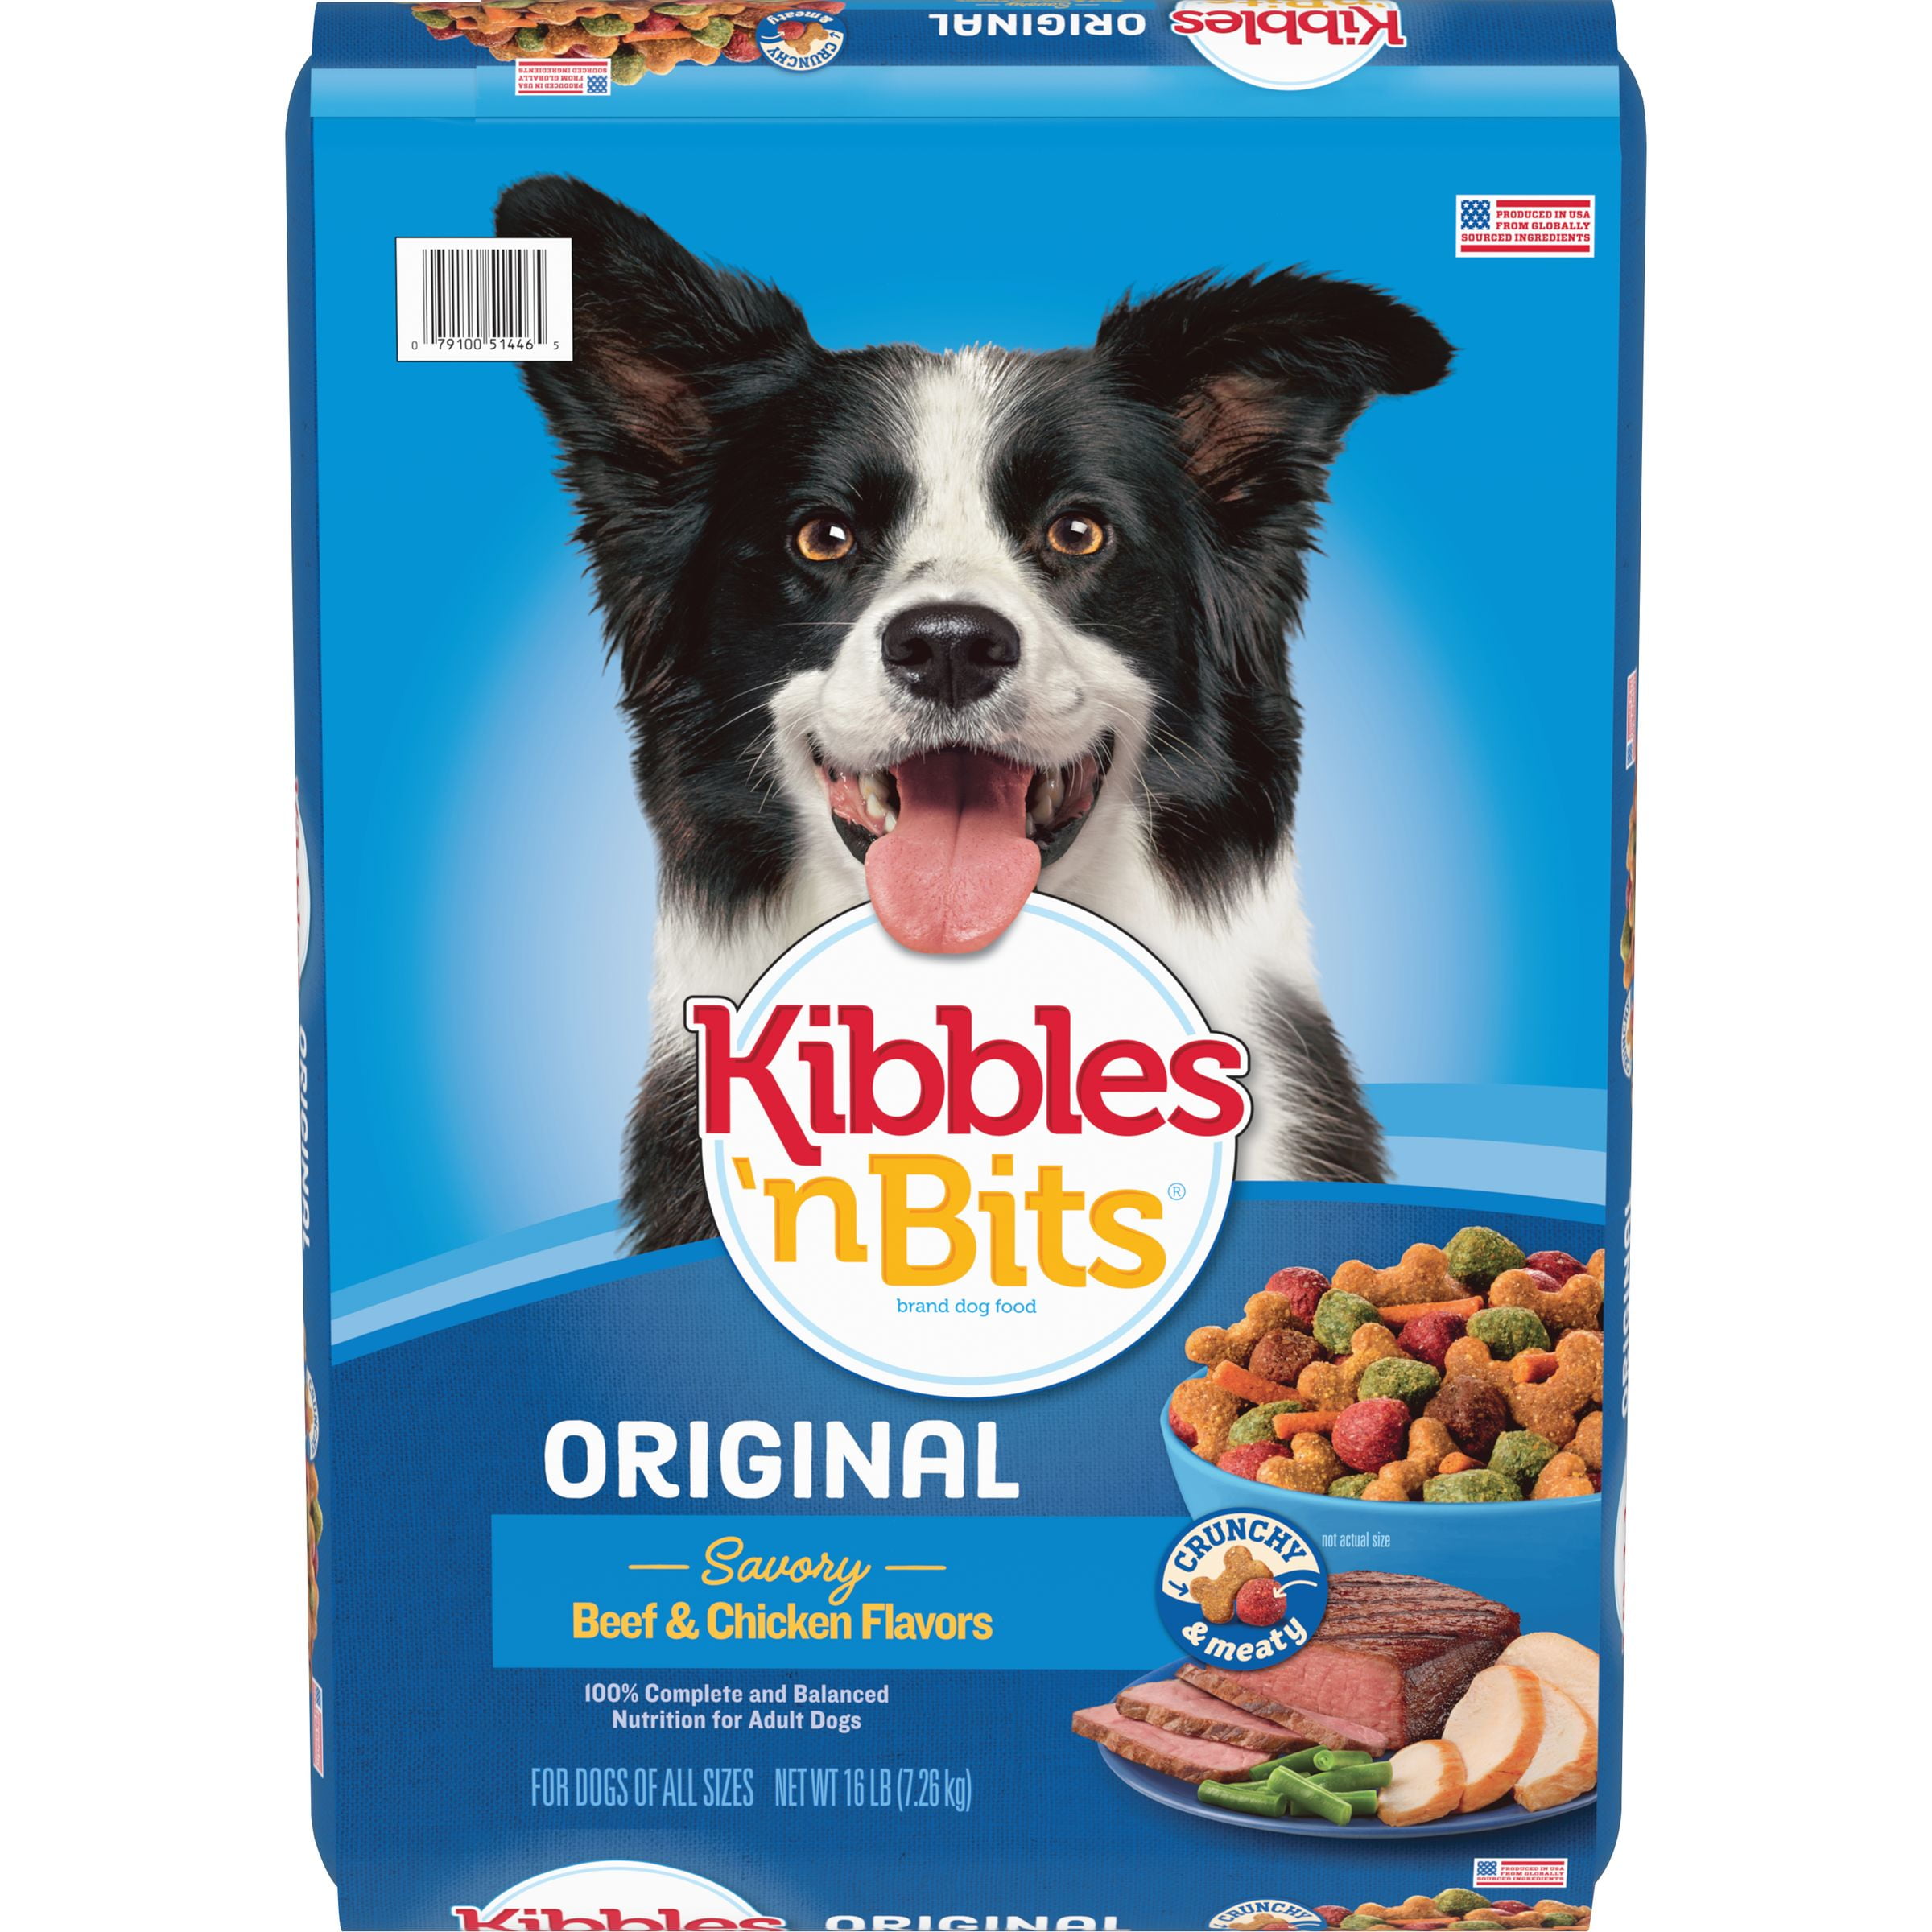 Kibbles 'n Bits Original Dry Dog Food, 16Pound Walmart